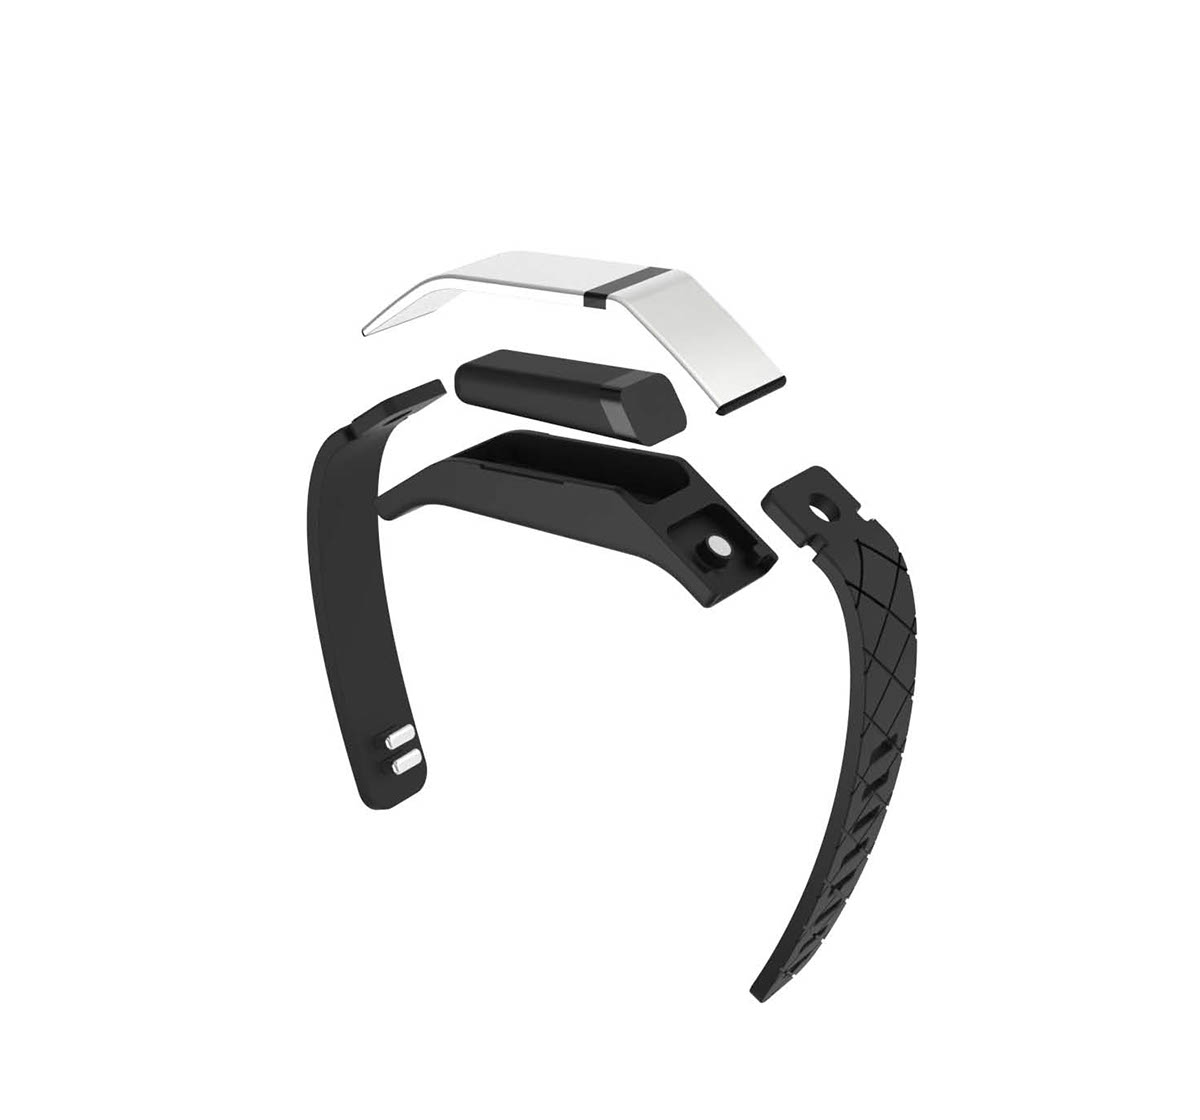 Fitbit FitBit Flex tracker wearables fitness Wristband tech gadgets force steps leather watch